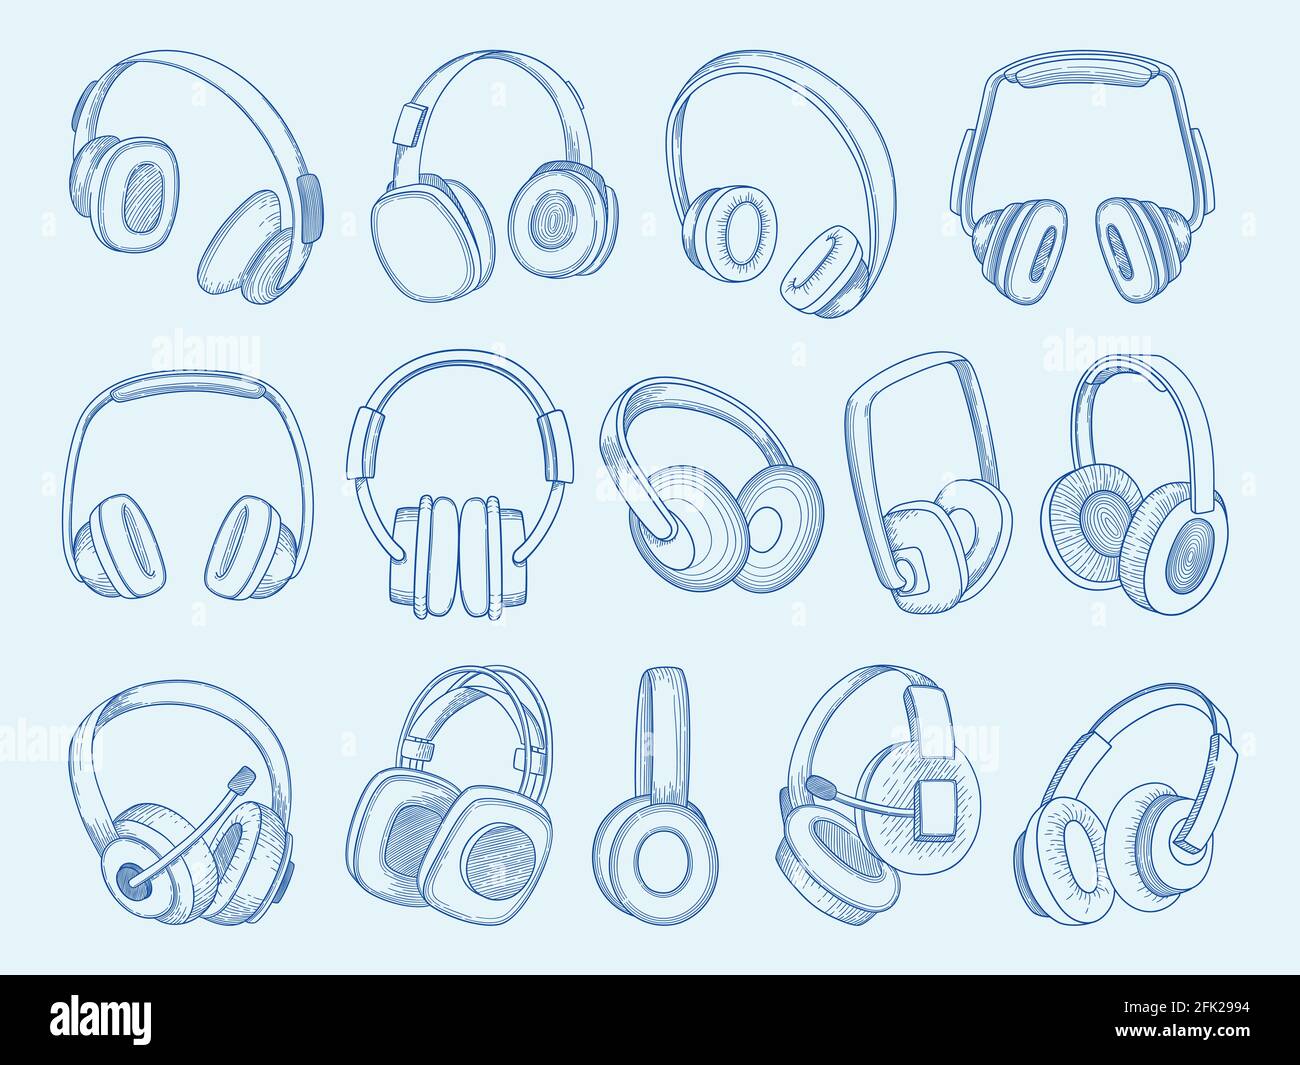 Headphones. Wireless technology communication equipment music acoustic headphones vector sketch set Stock Vector